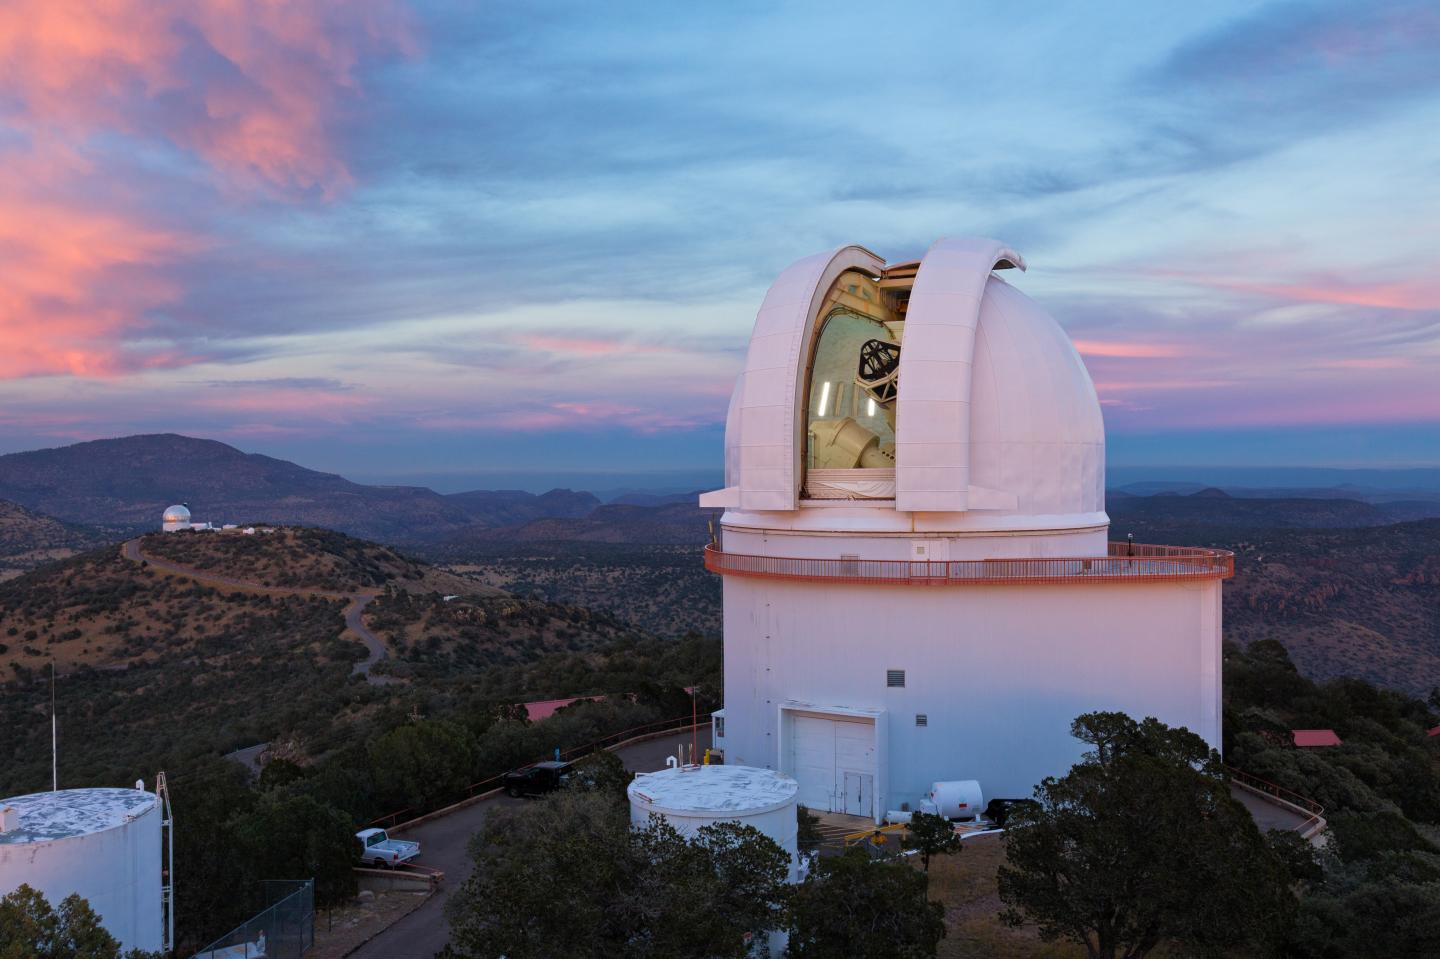 University of Texas at Austin's McDonald Observatory